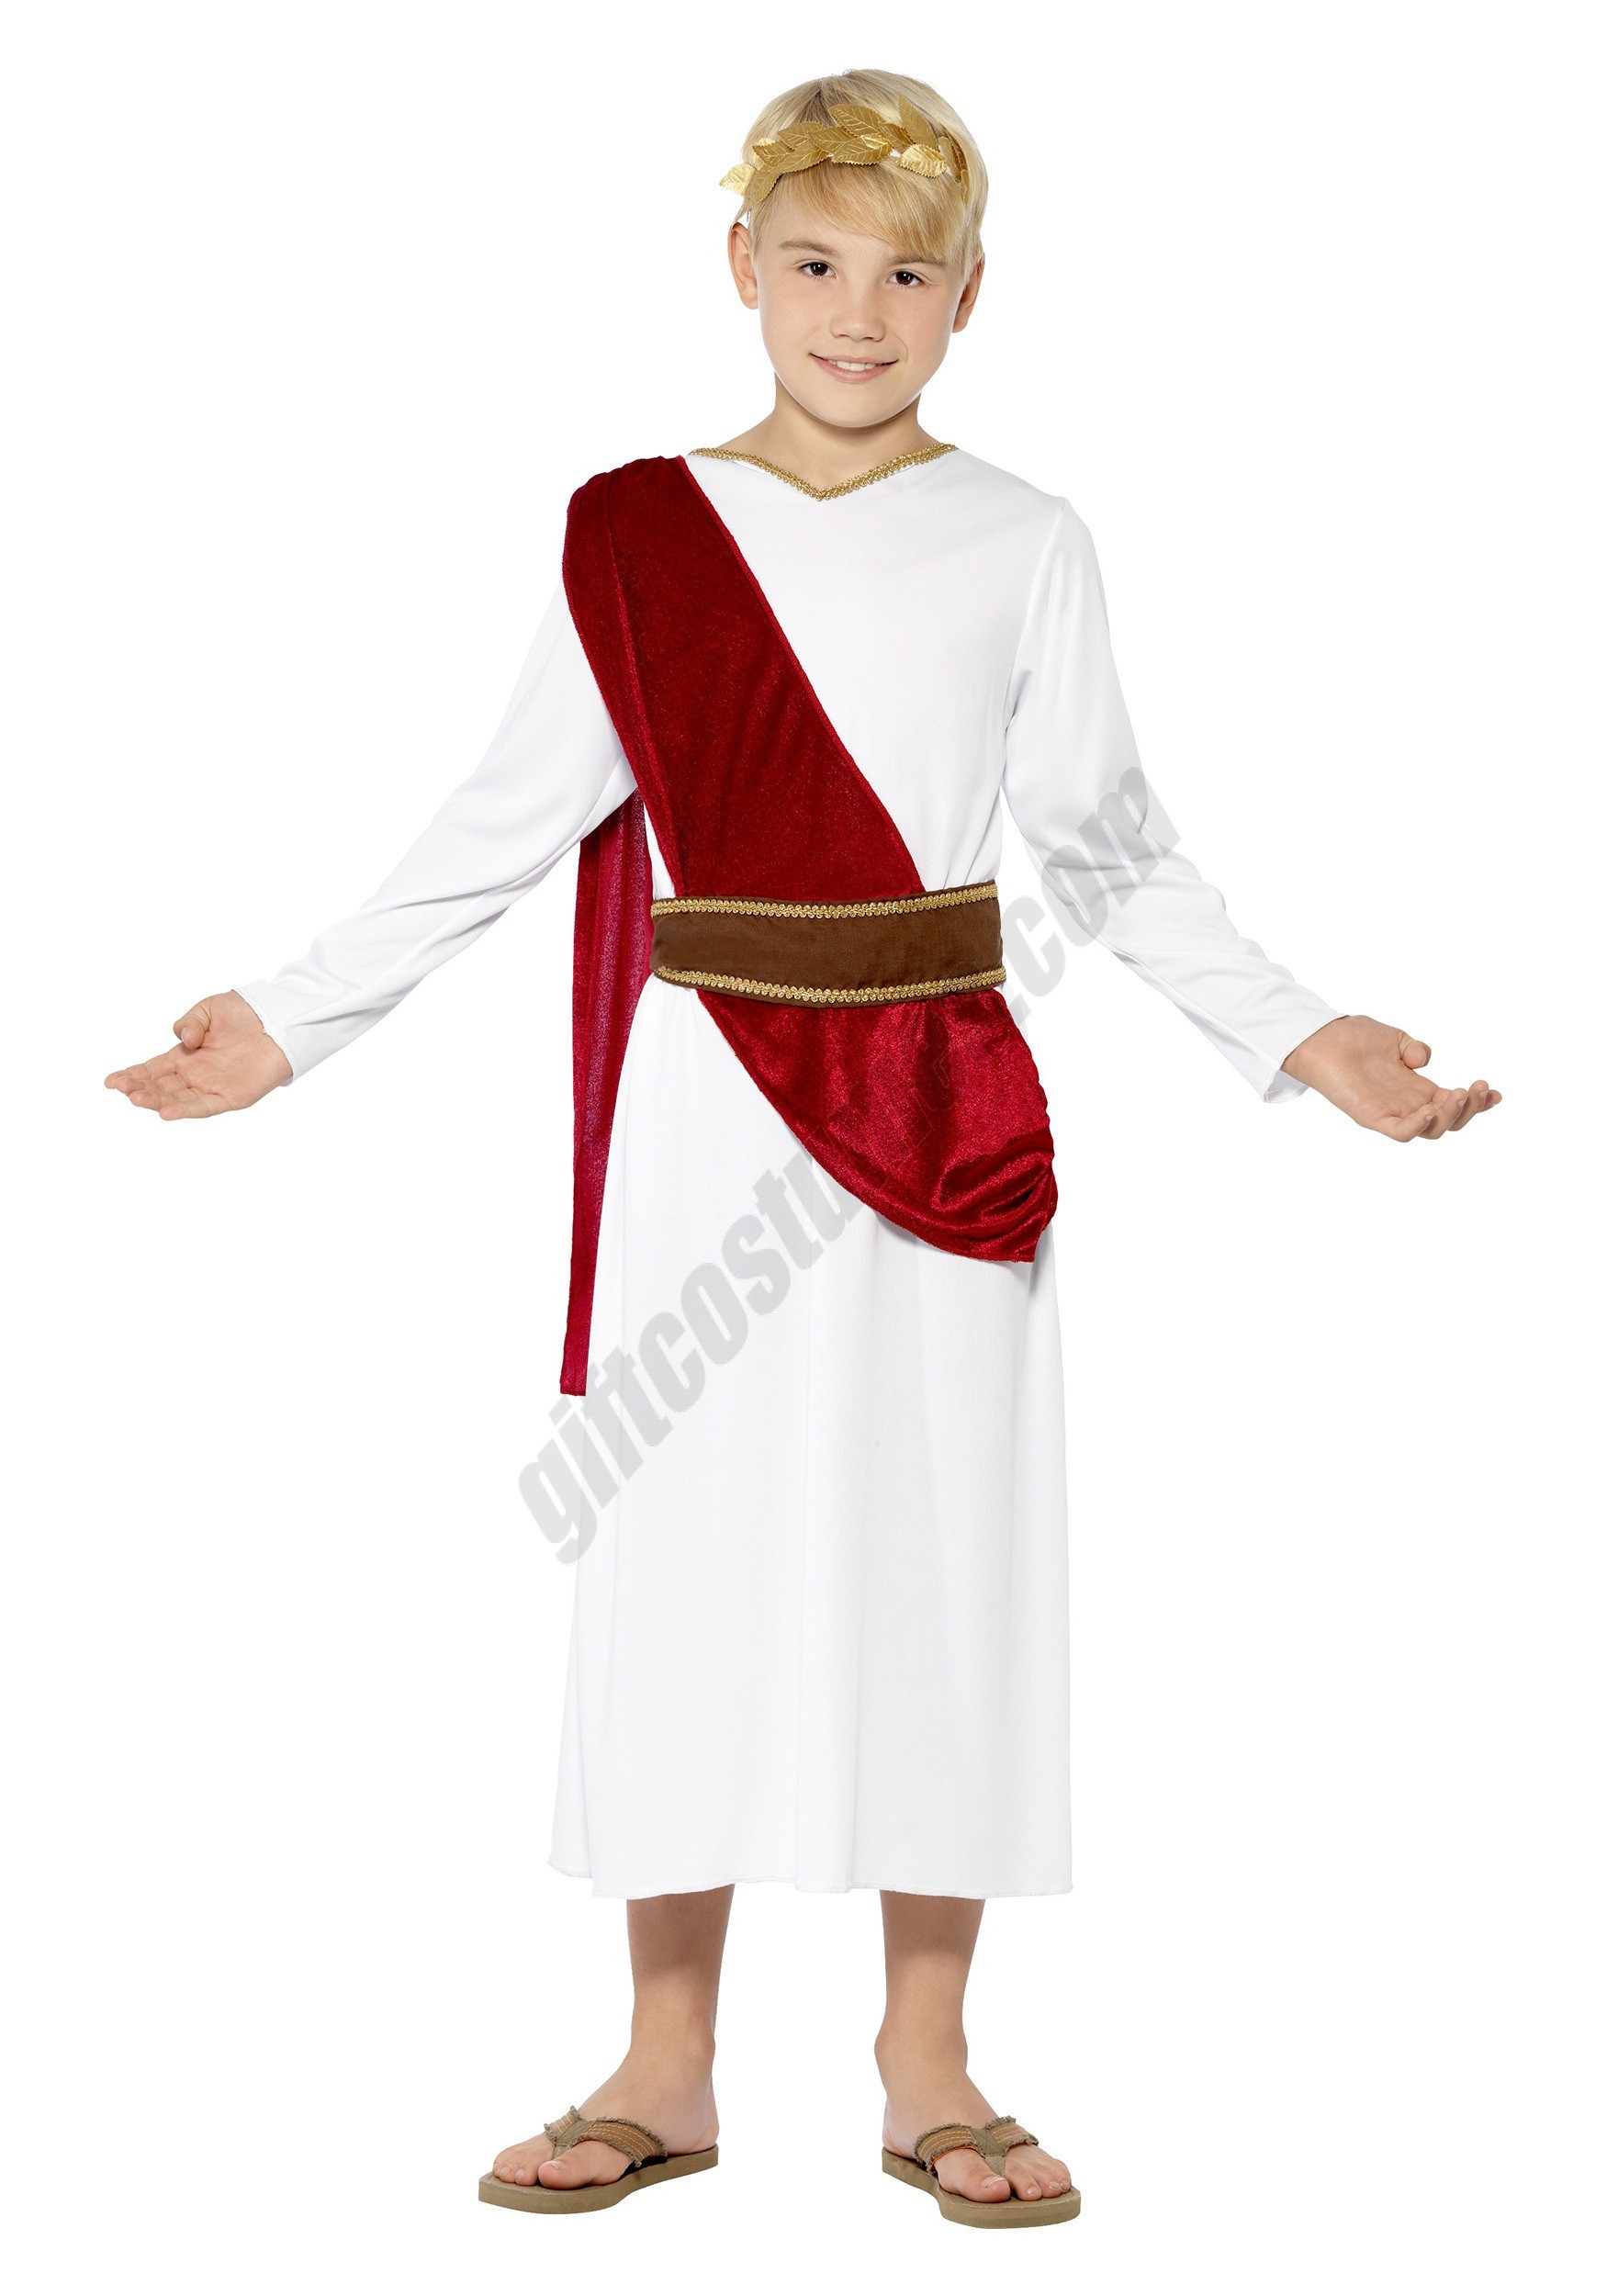 Child's Roman Boy Costume Promotions - Child's Roman Boy Costume Promotions